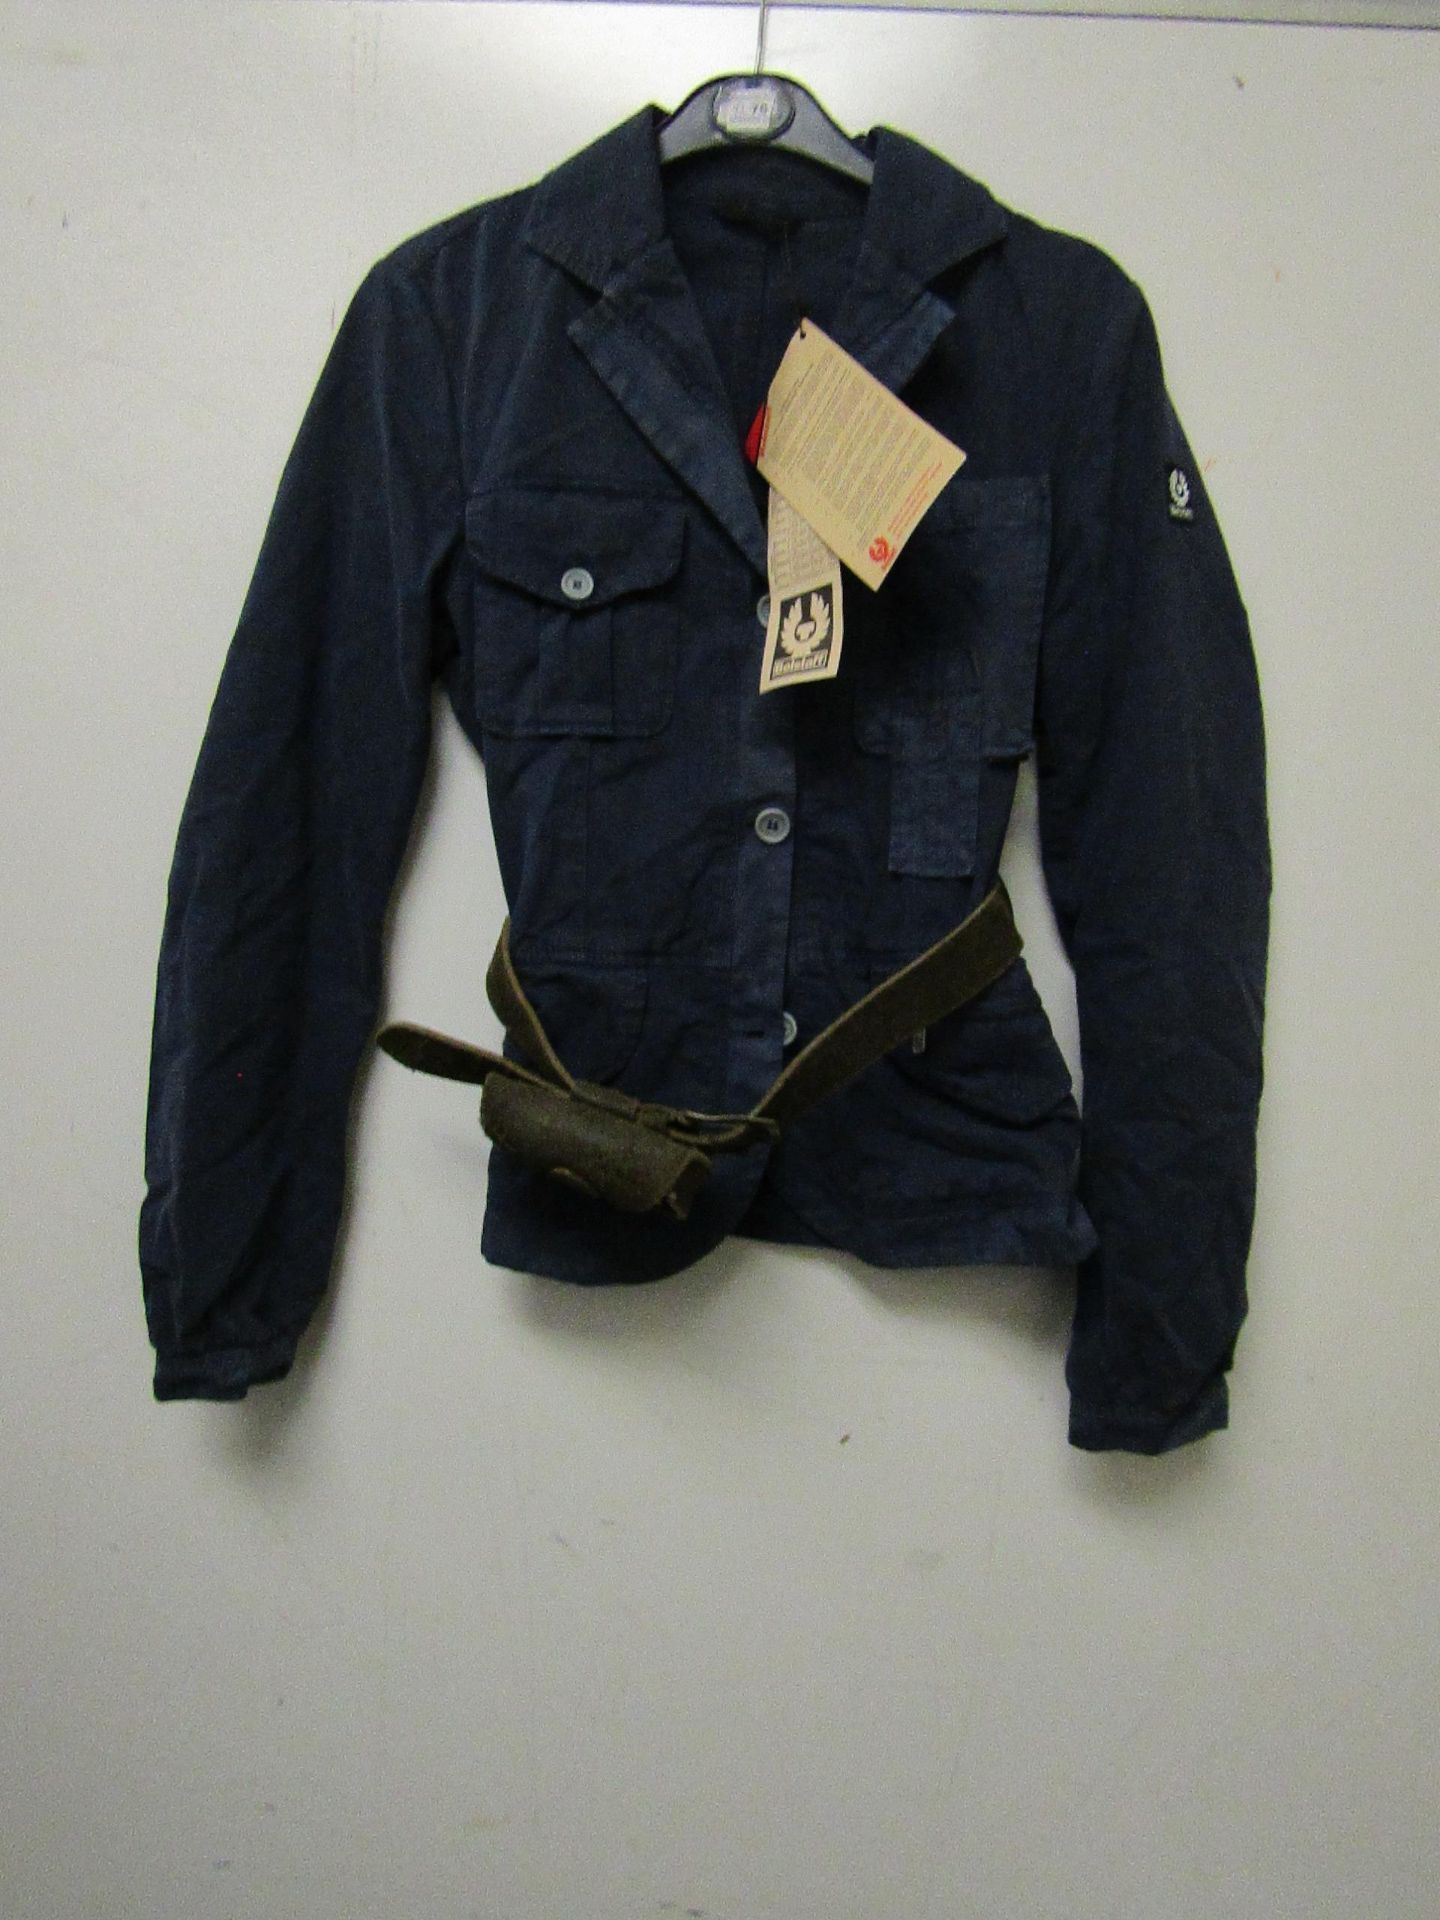 Belstaff Nairobi jacket, size 42, with tags.